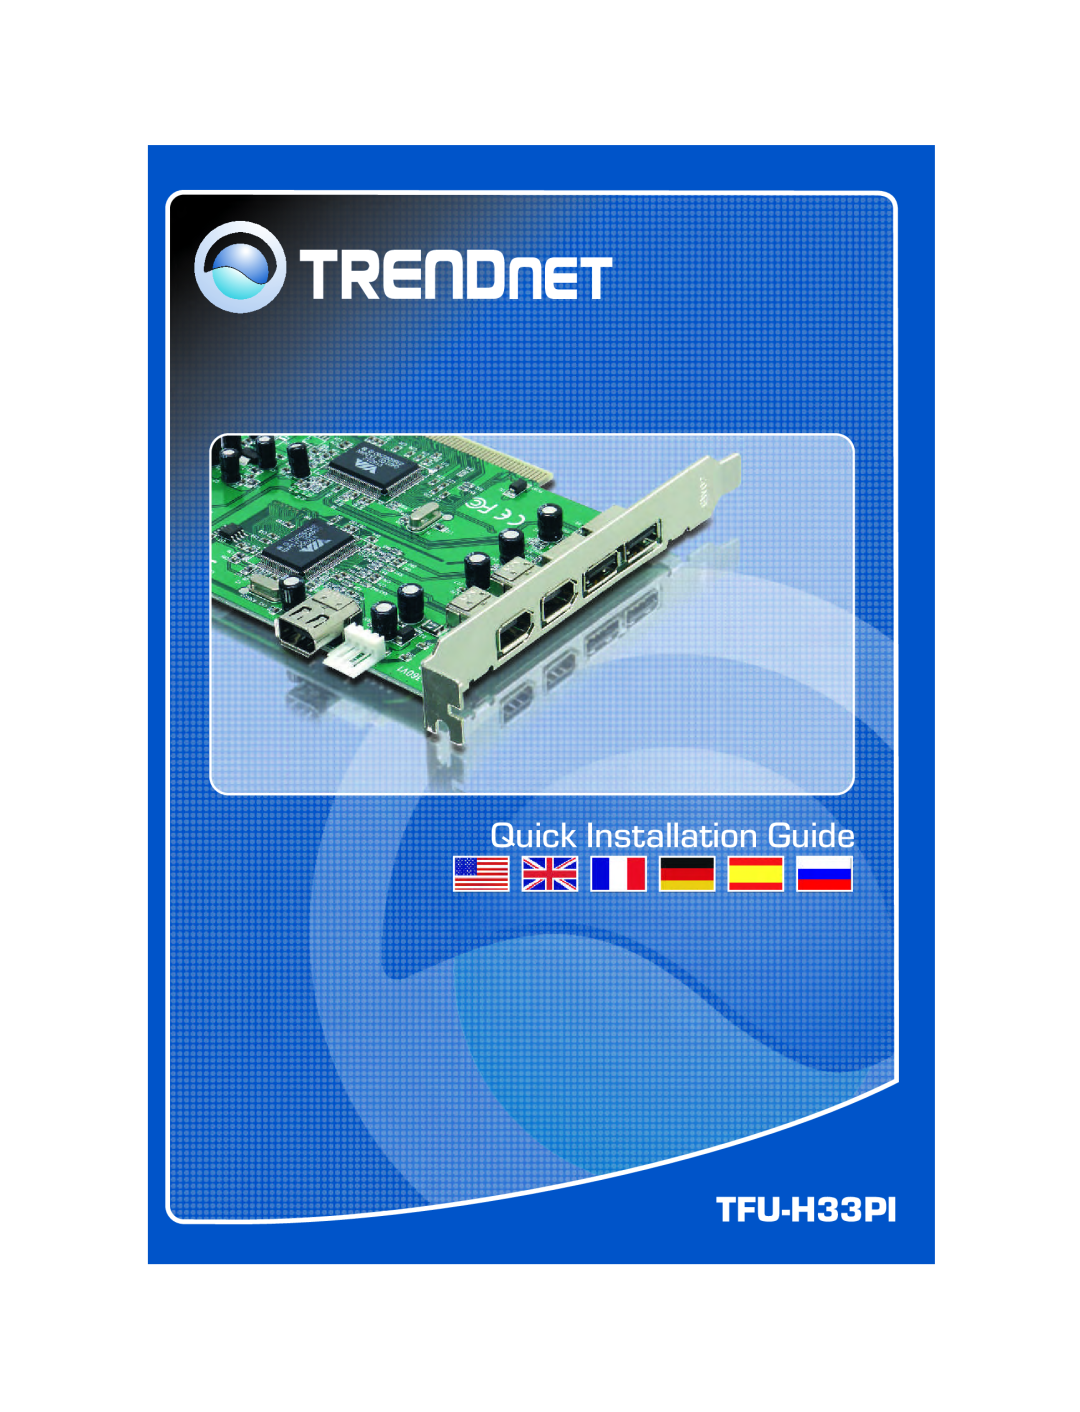 TRENDnet TFU-H33PI manual Quick Installation Guide 